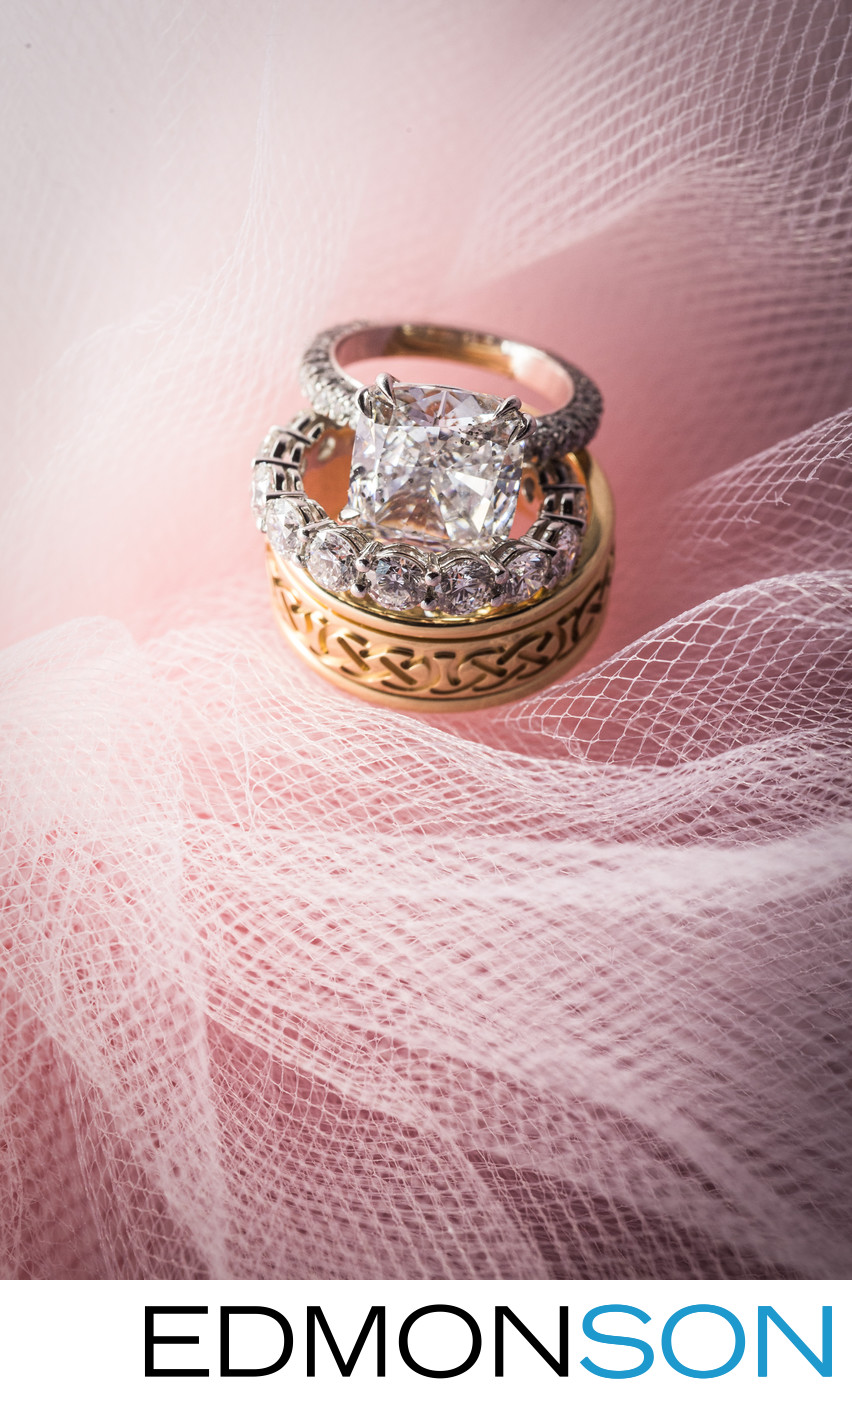 Pink Tulle Wedding Rings Photo At Four Season Dallas